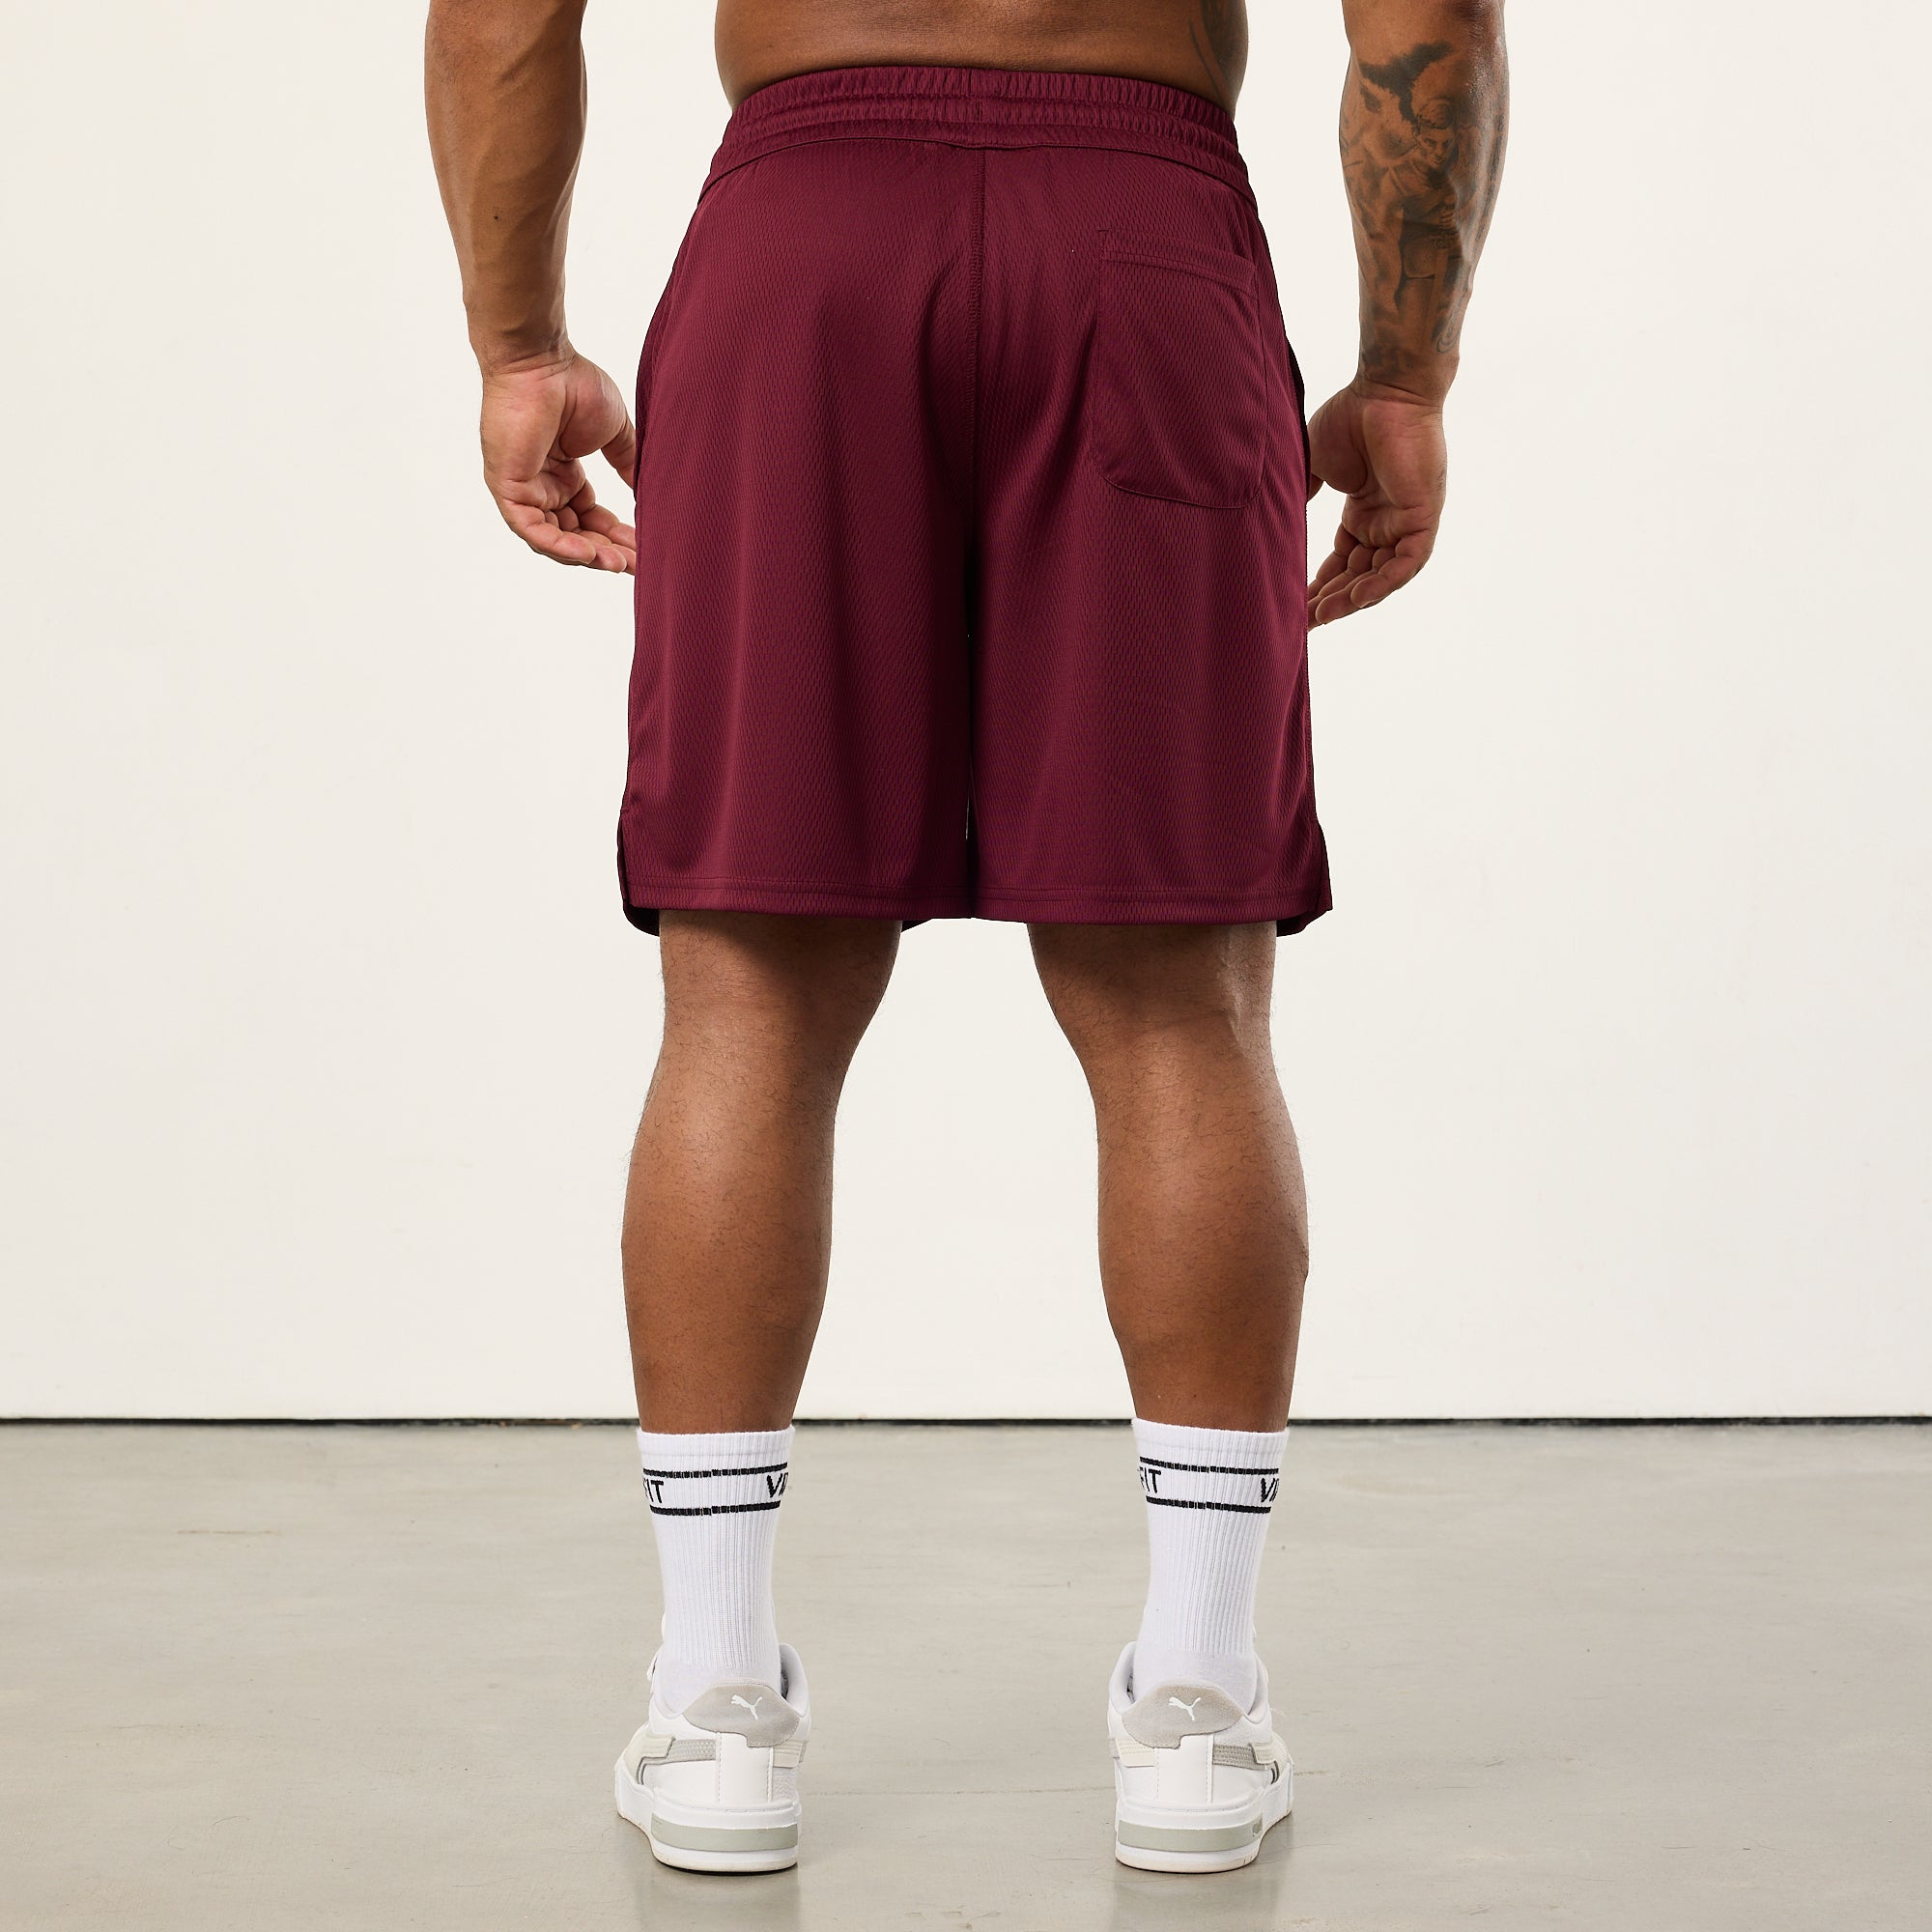 Vanquish Bodybuilding Burgundy Mesh Shorts